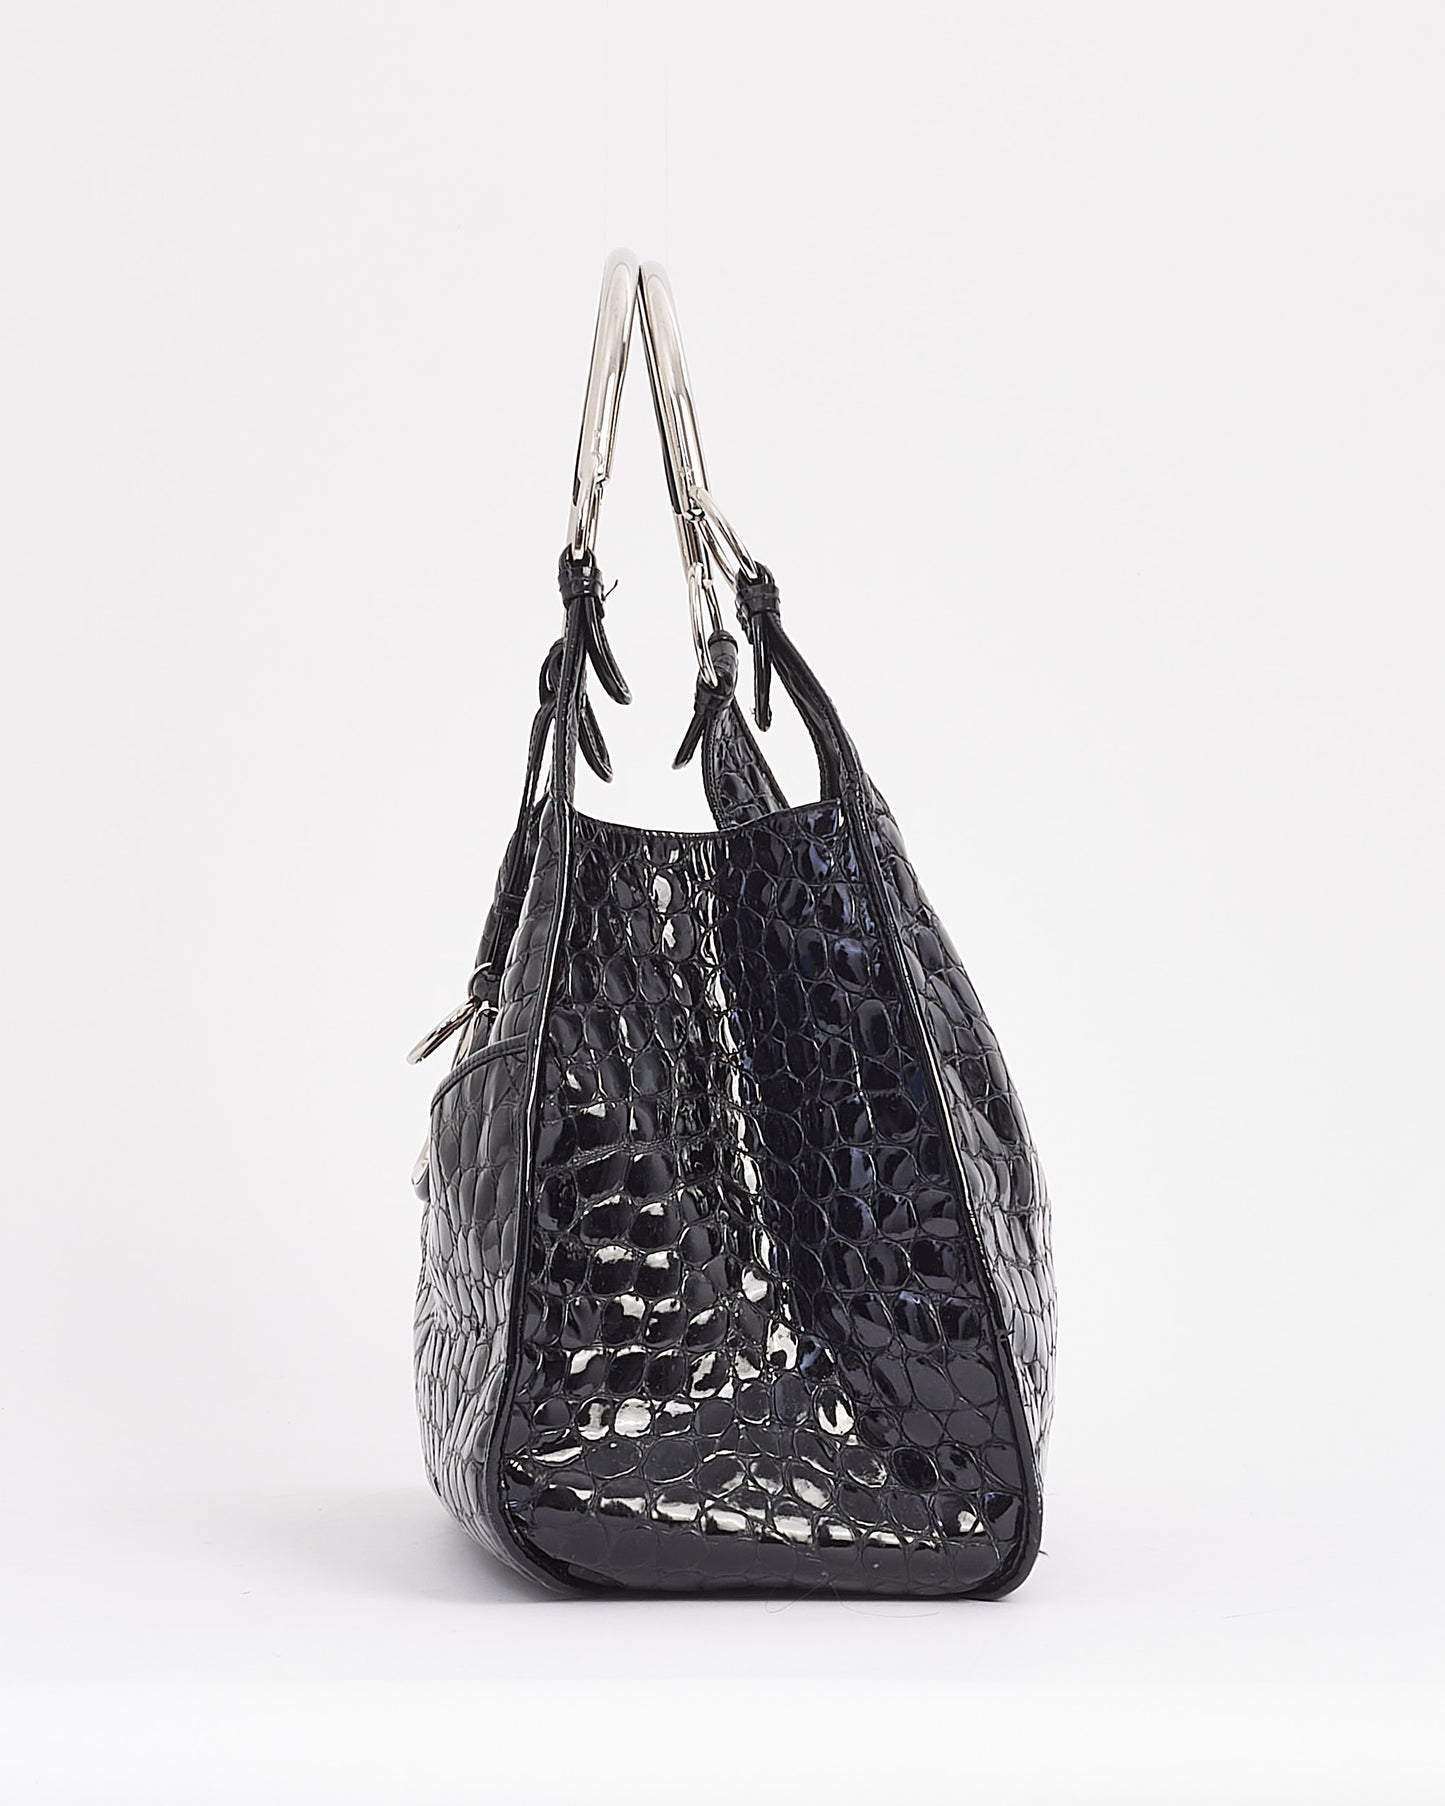 Dior Black Croc Embossed Patent Leather Hobo Bag